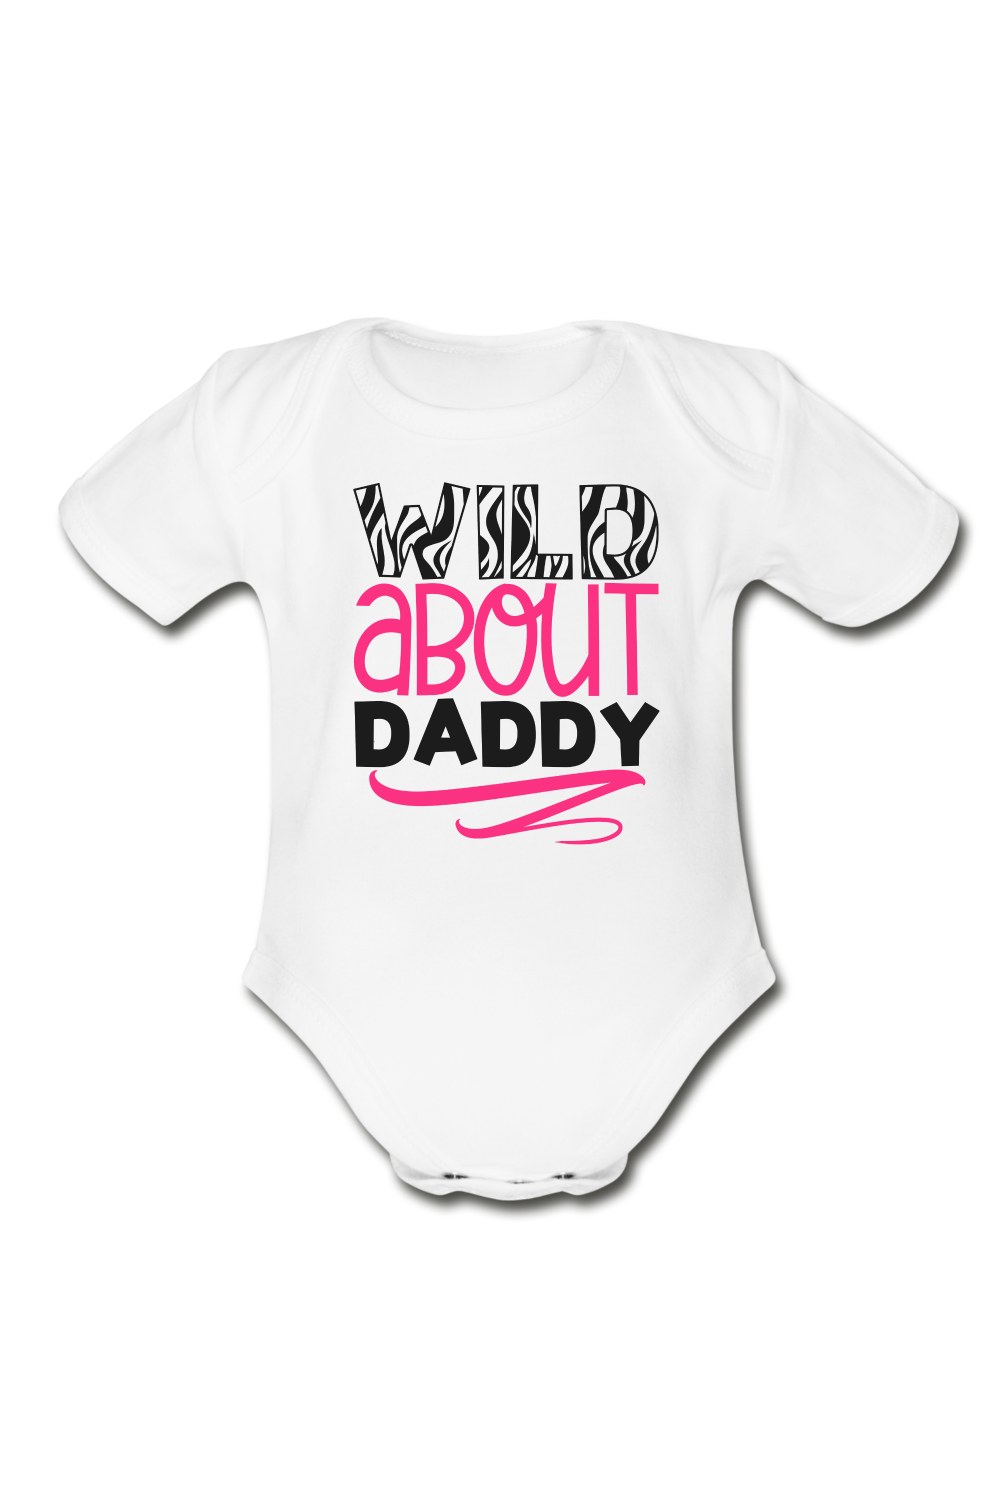 Baby Girl Wild About Daddy Short Sleeve Baby Bodysuit - white - NicholesGifts.online